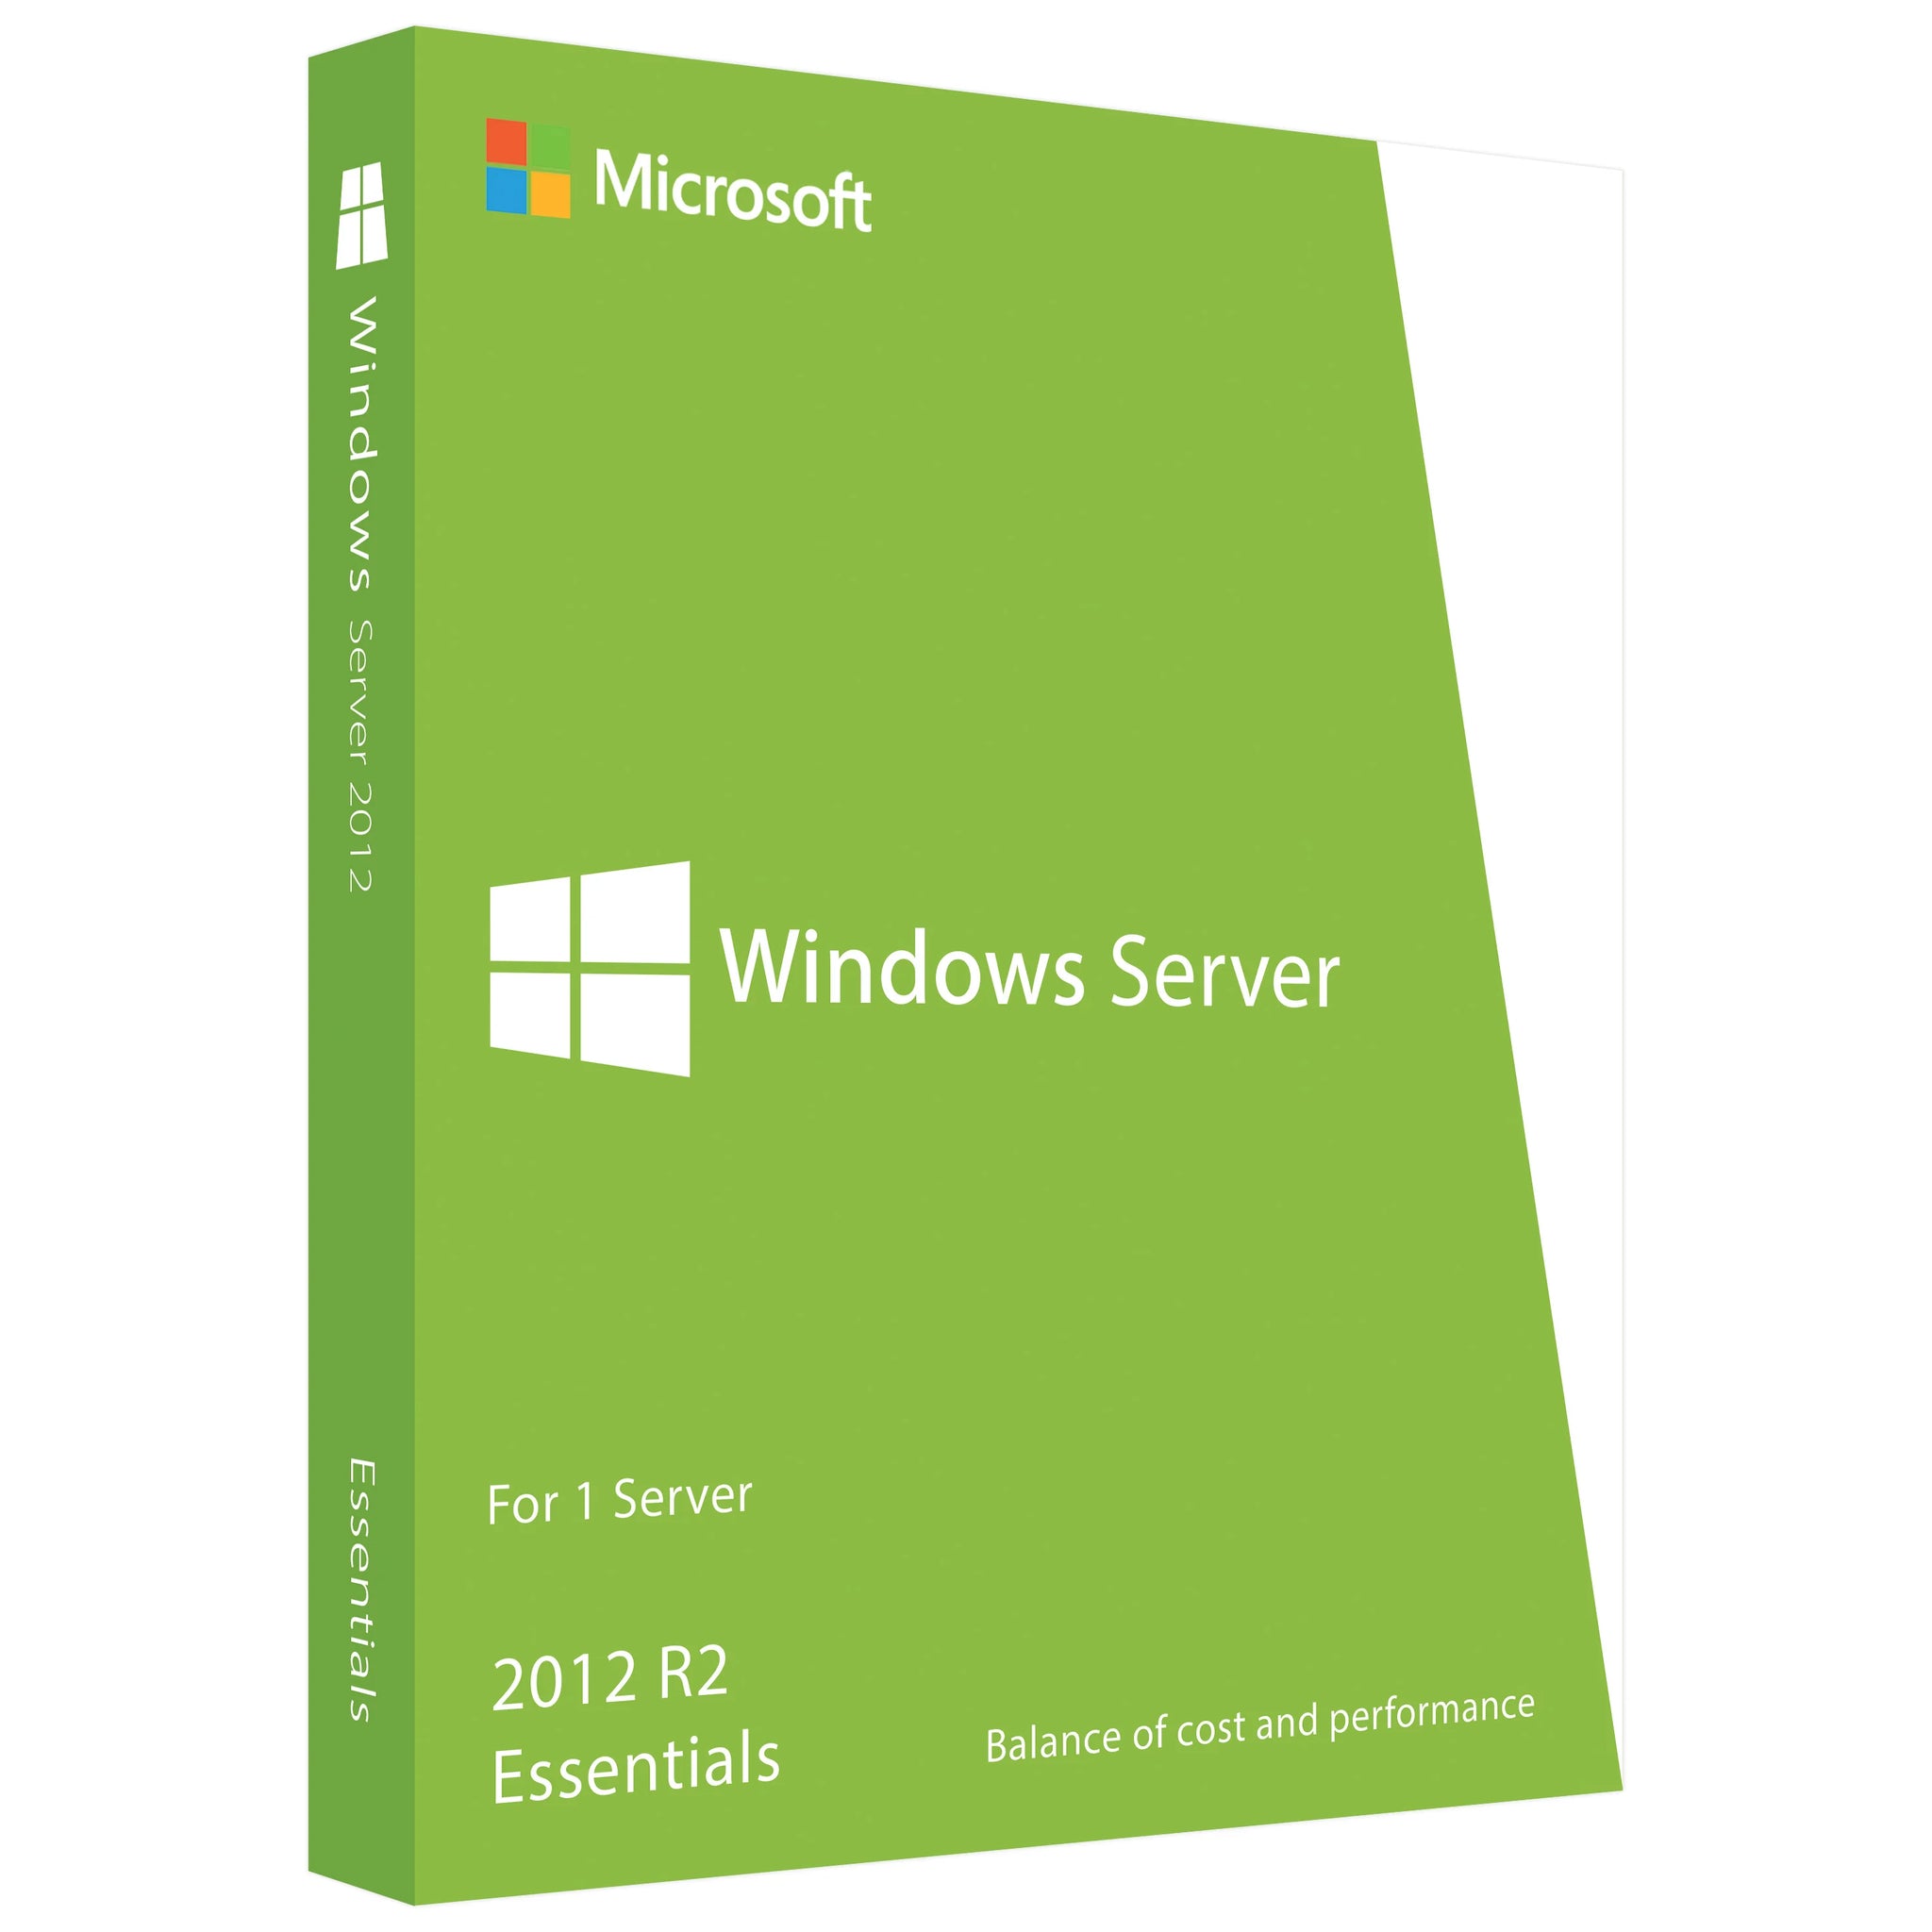 Microsoft Windows Server 2012 R2 Essentials - Lifetime License Key